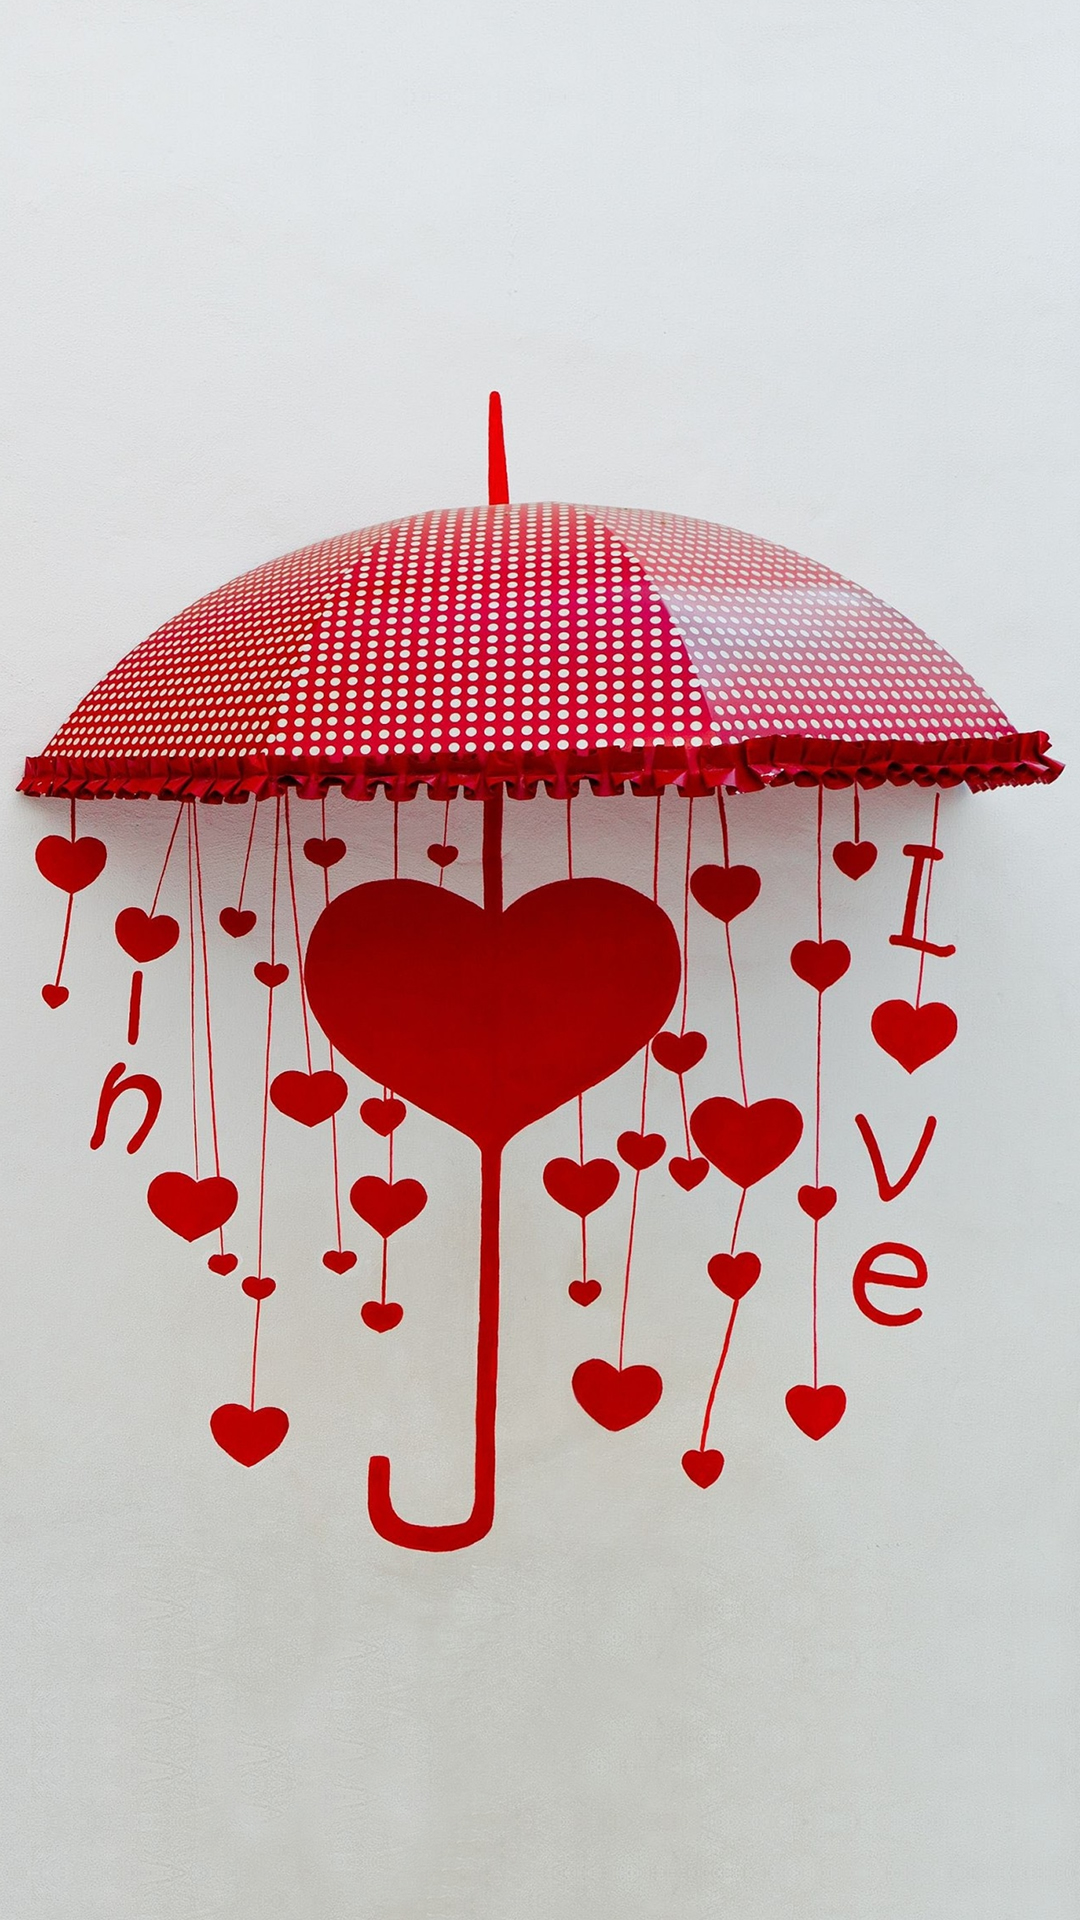 Umbrella of Love Android wallpaper